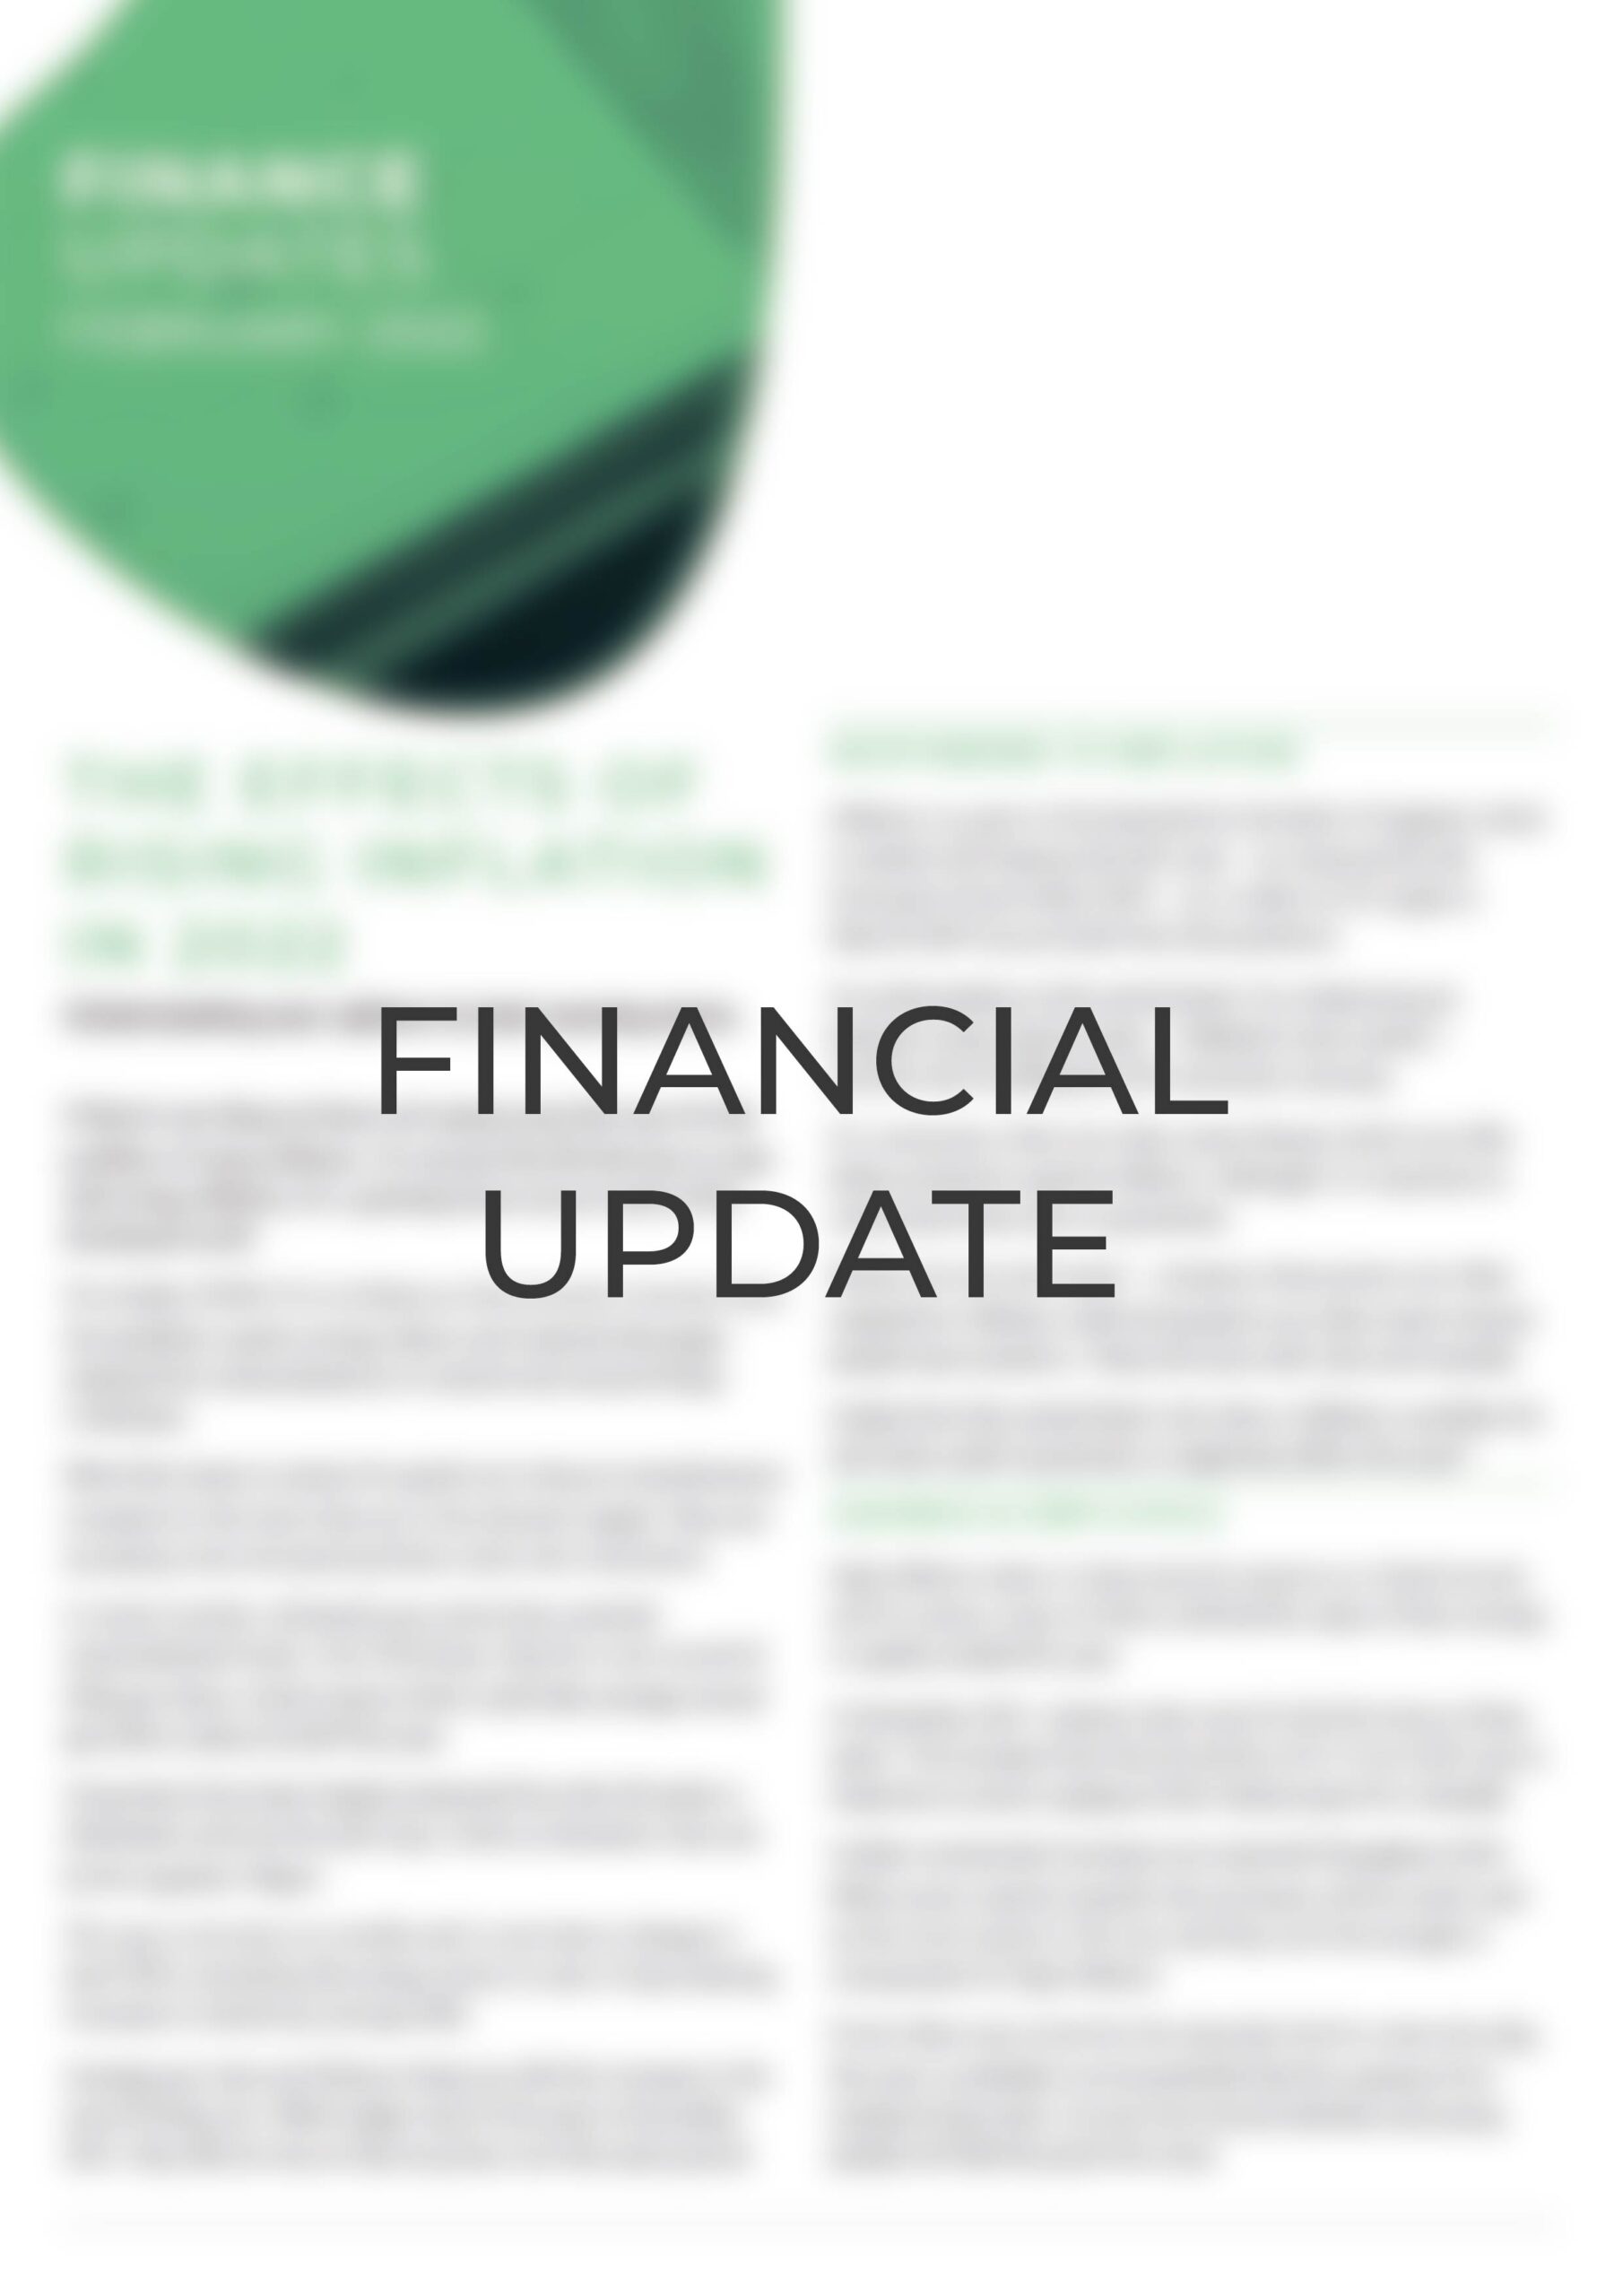 Finance Update - Long Term Care Funding